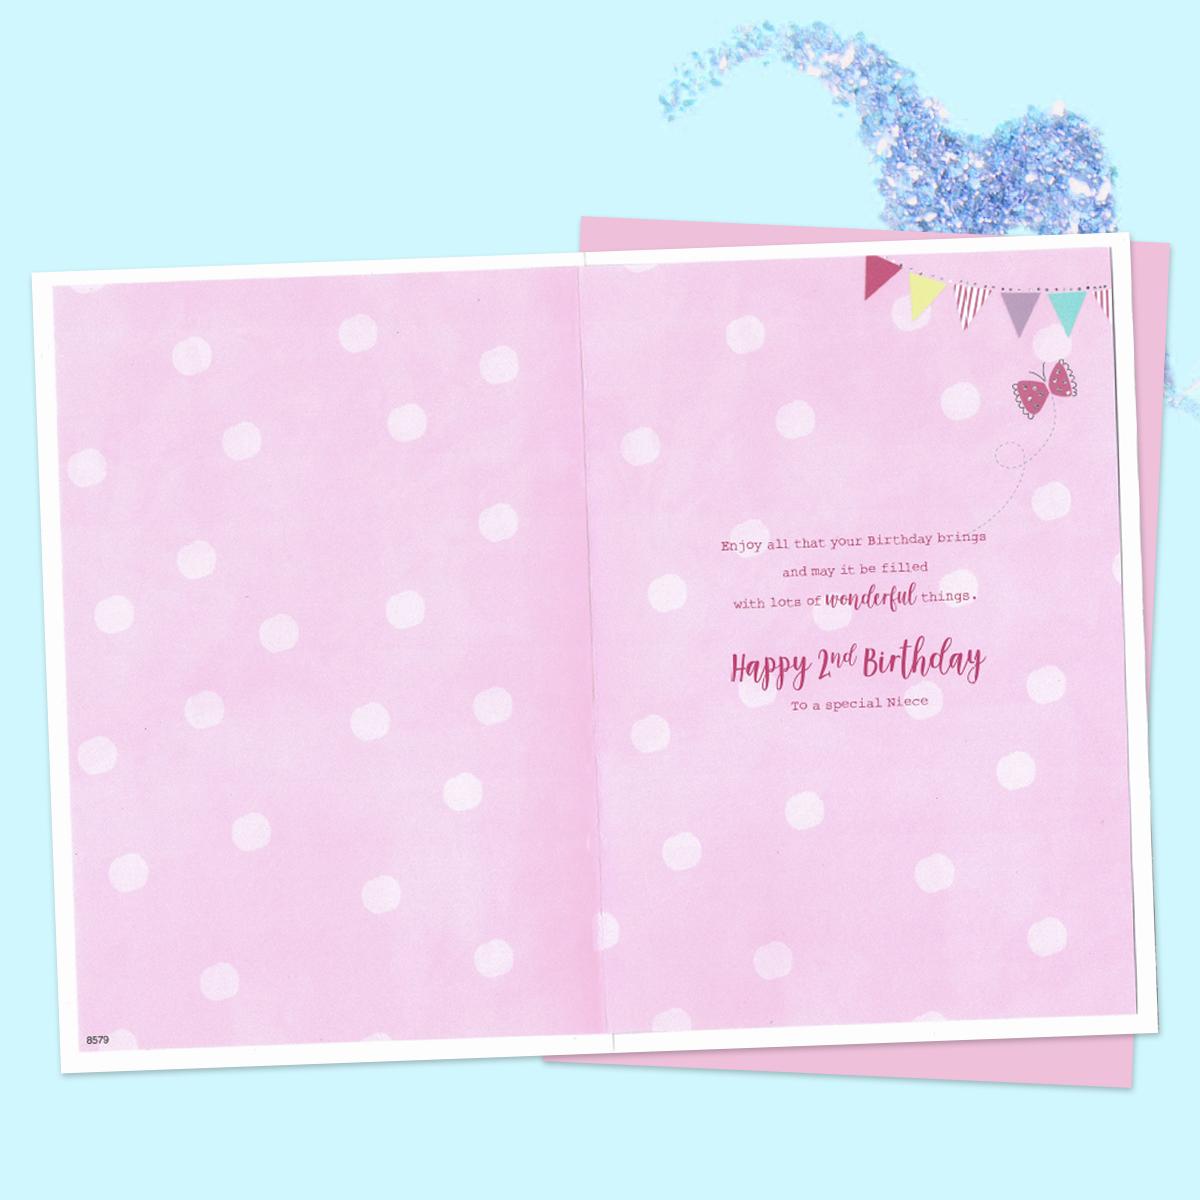 Niece Age 2 Birthday Card Alongside Its Pink Envelope